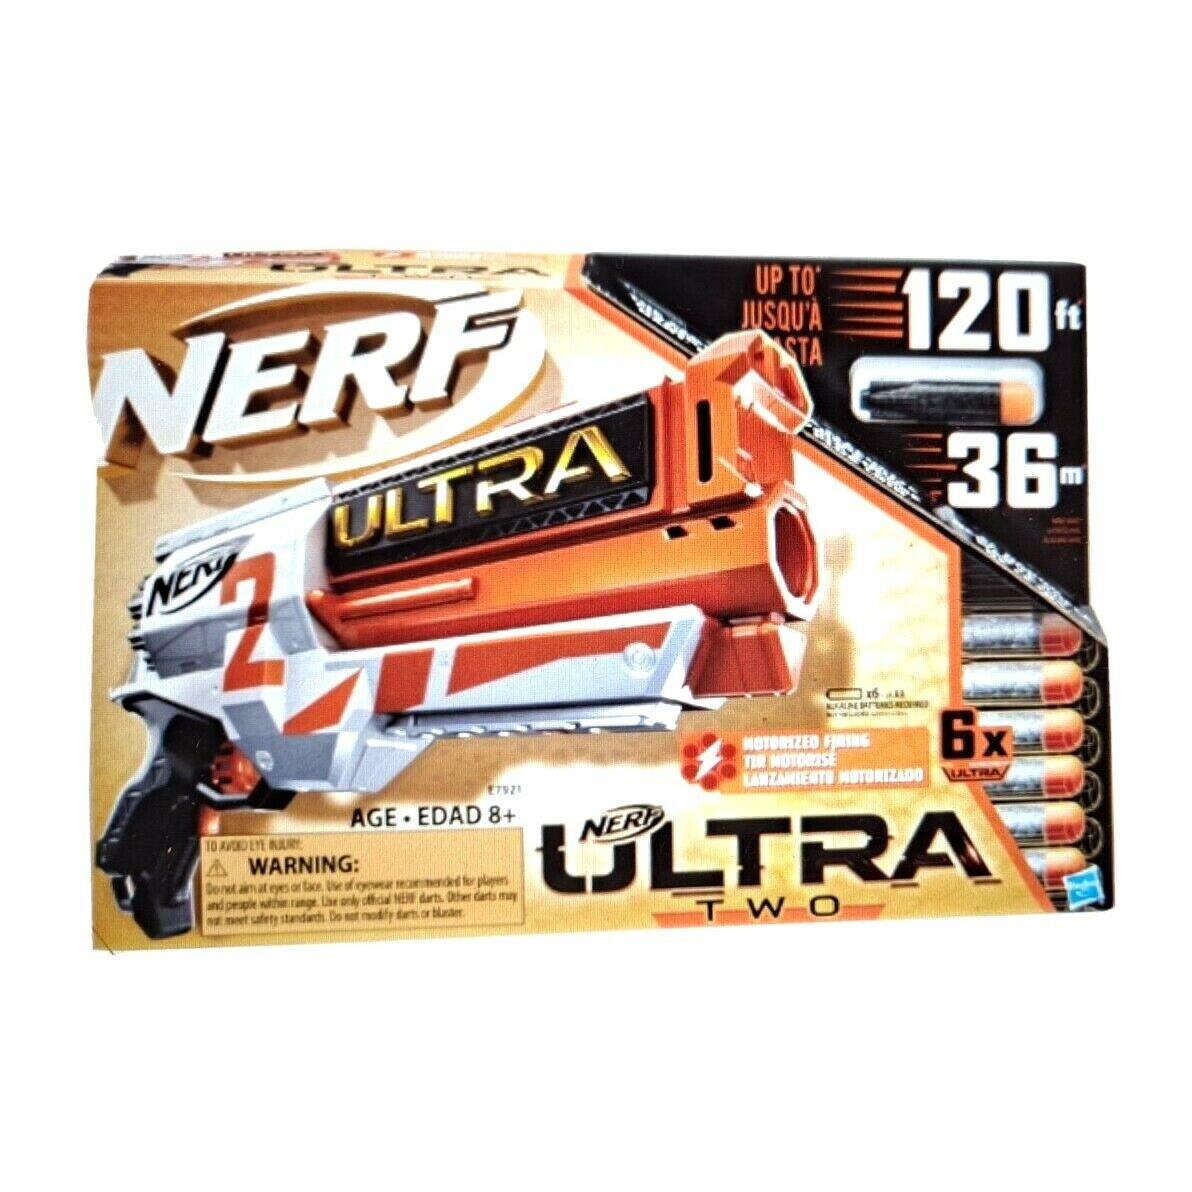 Nerf Ultra 2 Two Motorized Firing Blaster with Fast Back Reloading Toy Gun